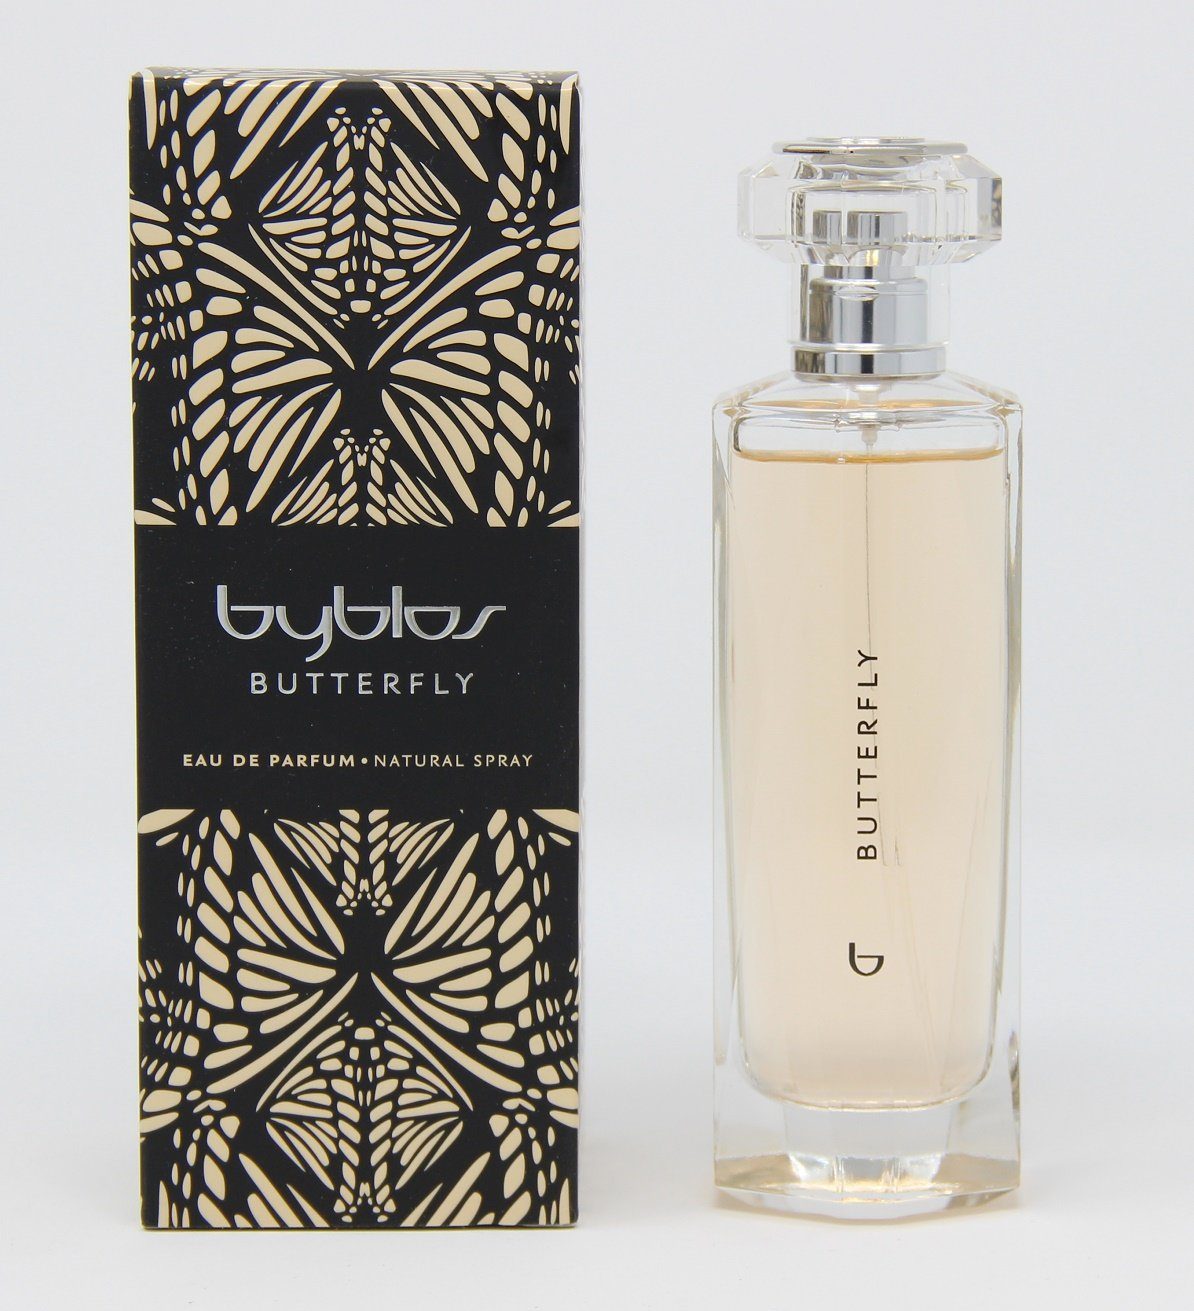 [Vertrauen zuerst und niedriger Preis] Byblos Eau de Toilette byblos 100 ml Parfum de Eau Butterfly